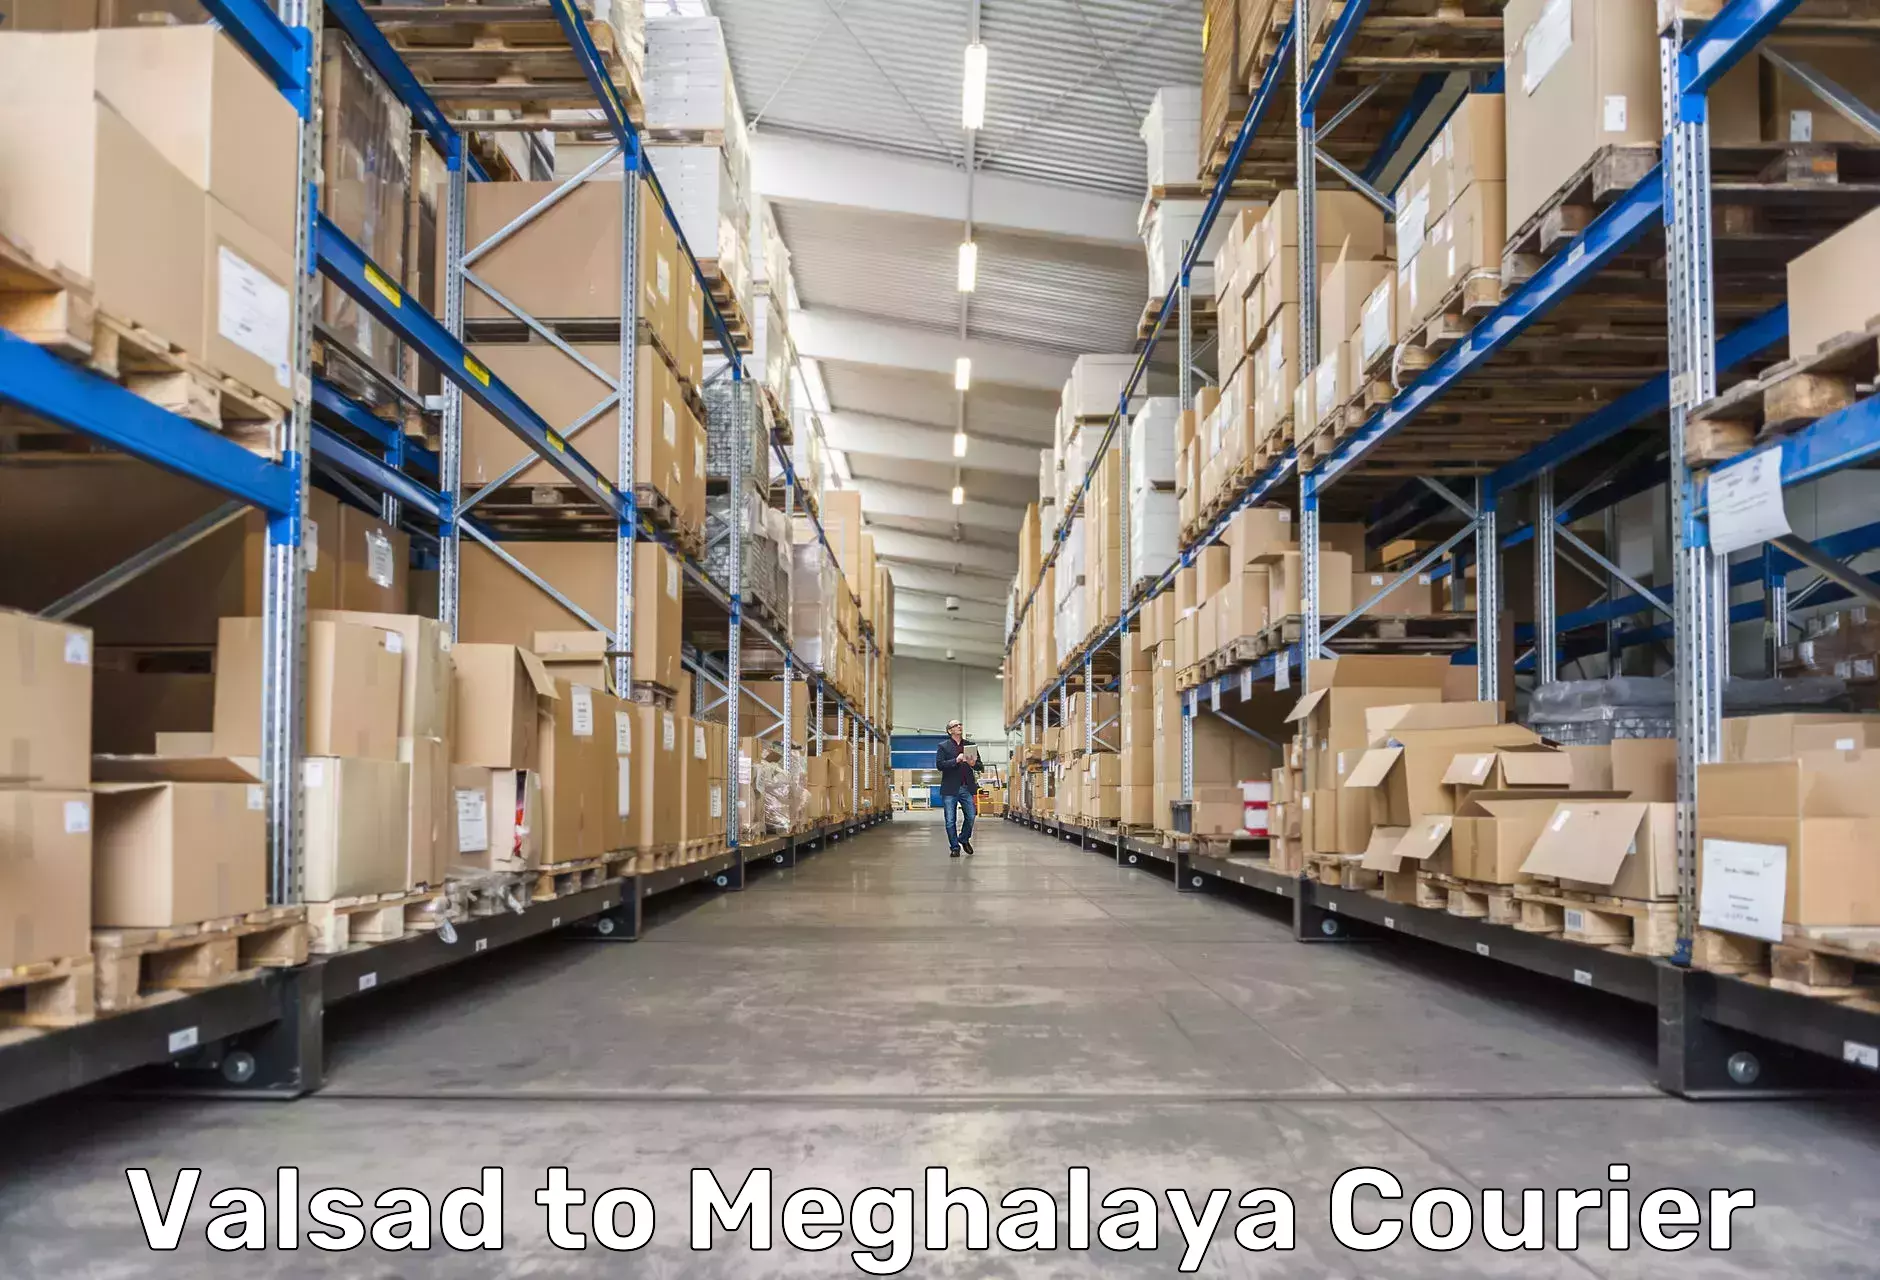 Courier service partnerships Valsad to Meghalaya